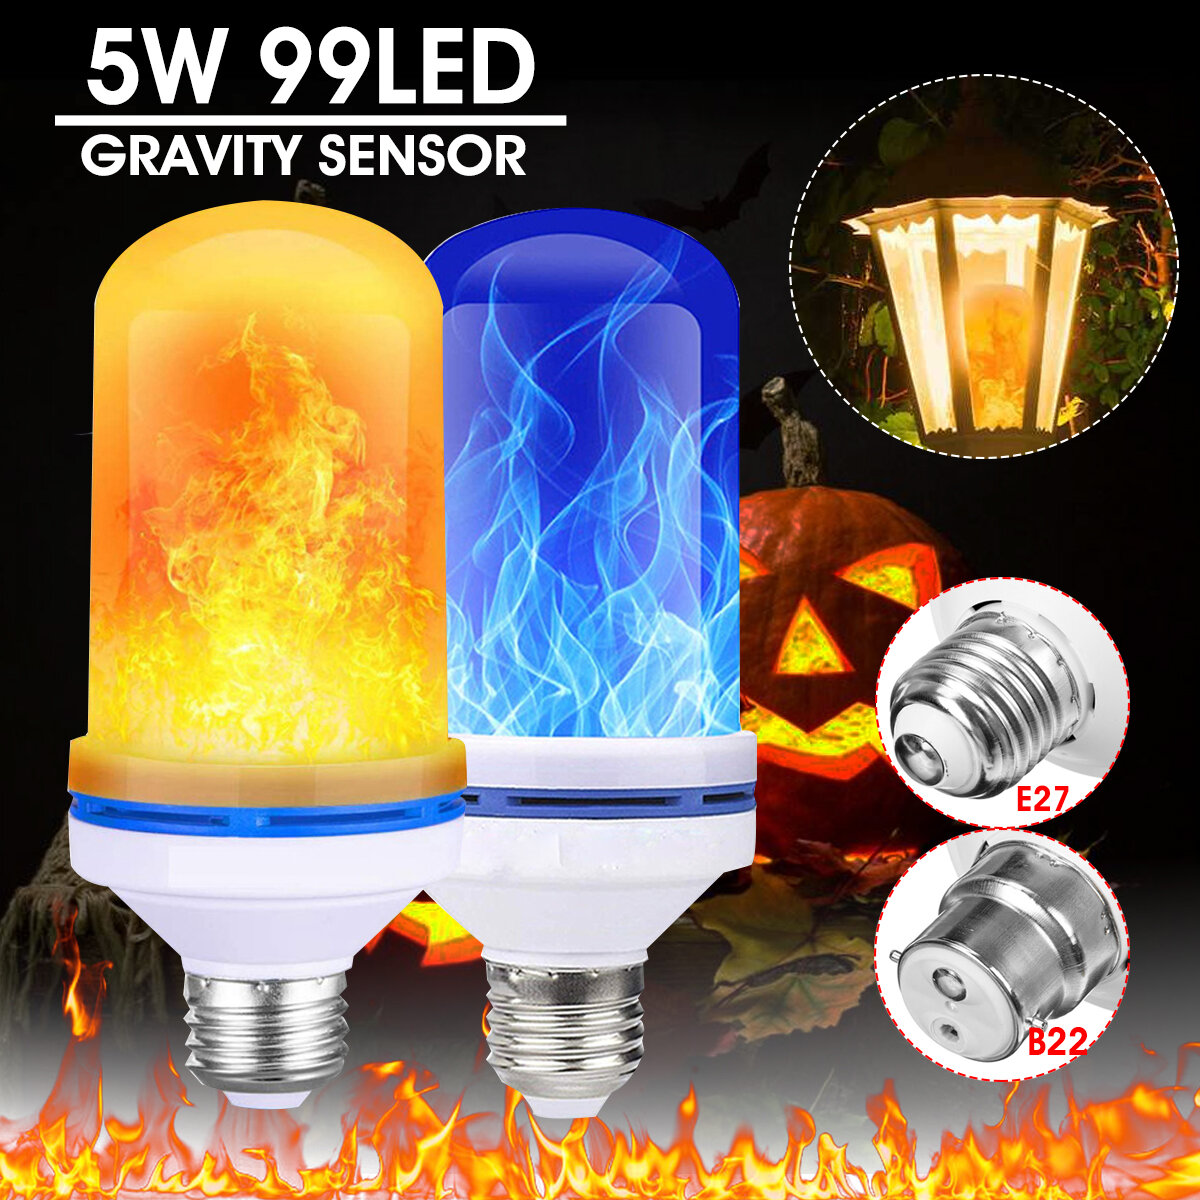 

E27/B22 99LED Beads 5W Super Bright 4 Modes Gravity Sensor Flame Effect Light Bulb Lamp Home Decor